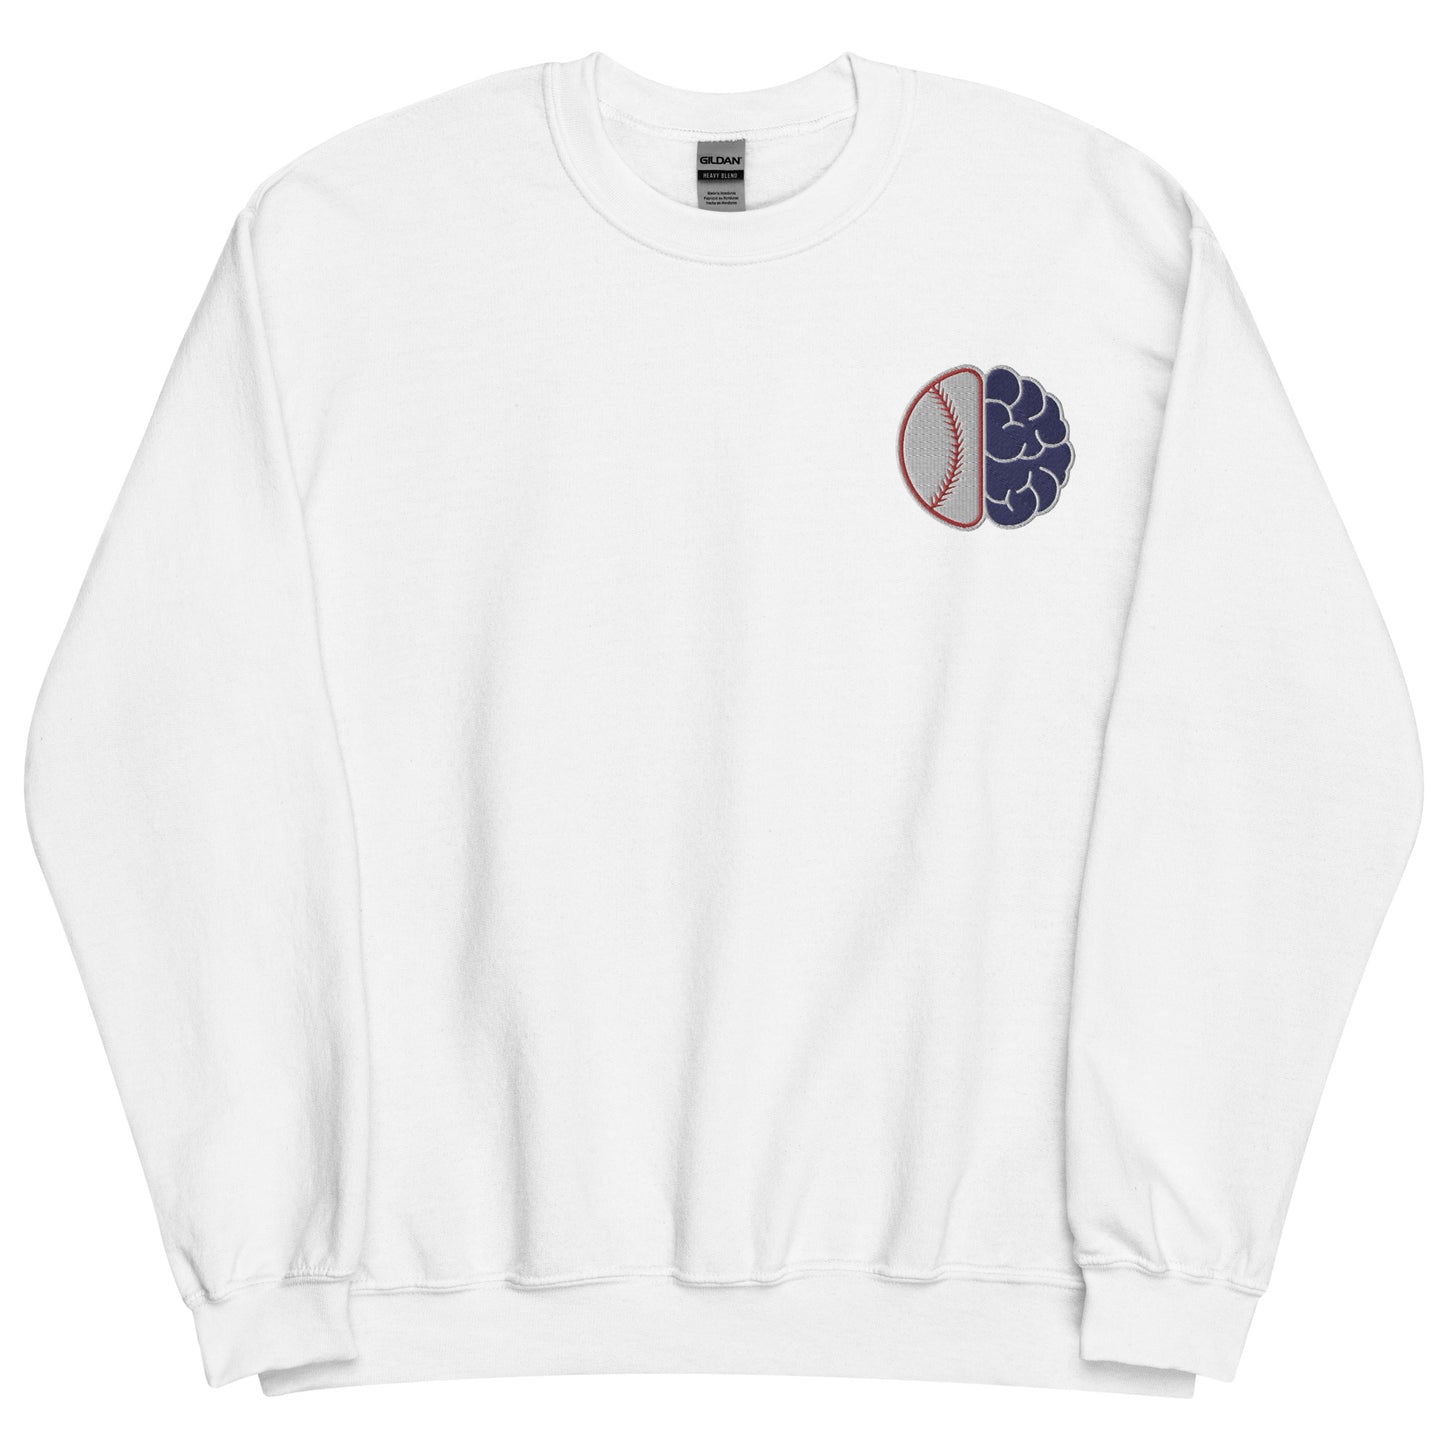 SS Basic Sweatshirt